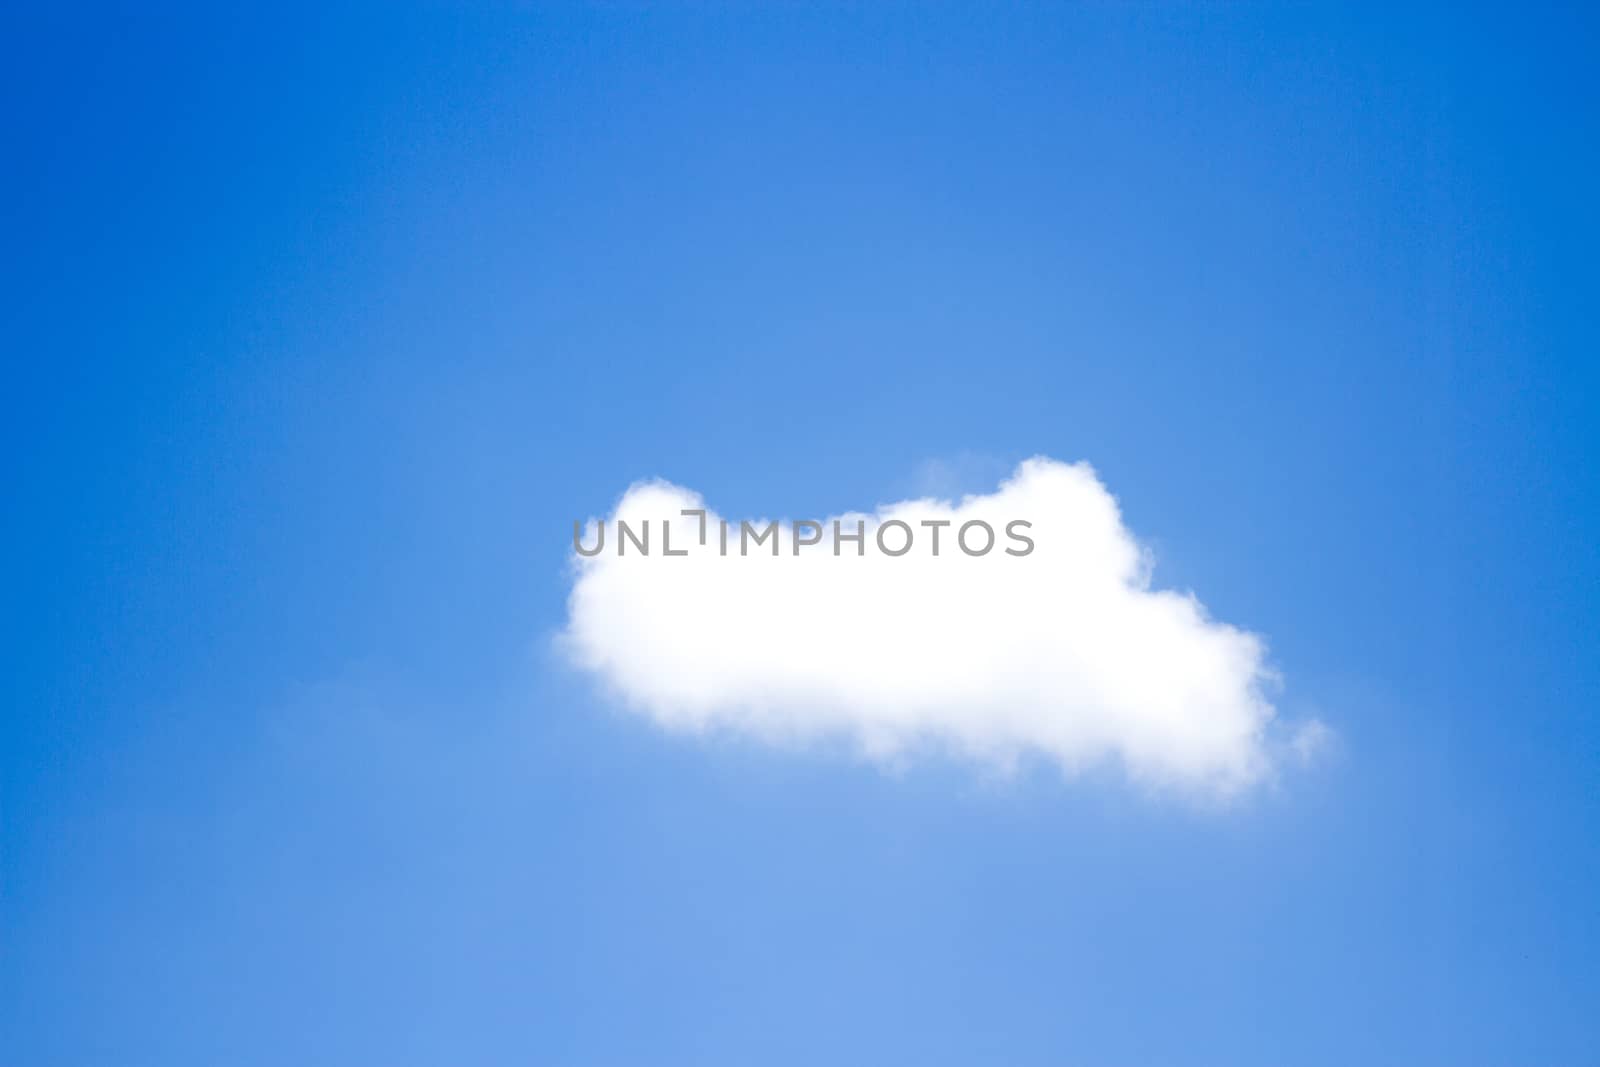 Light cloud with blue sky